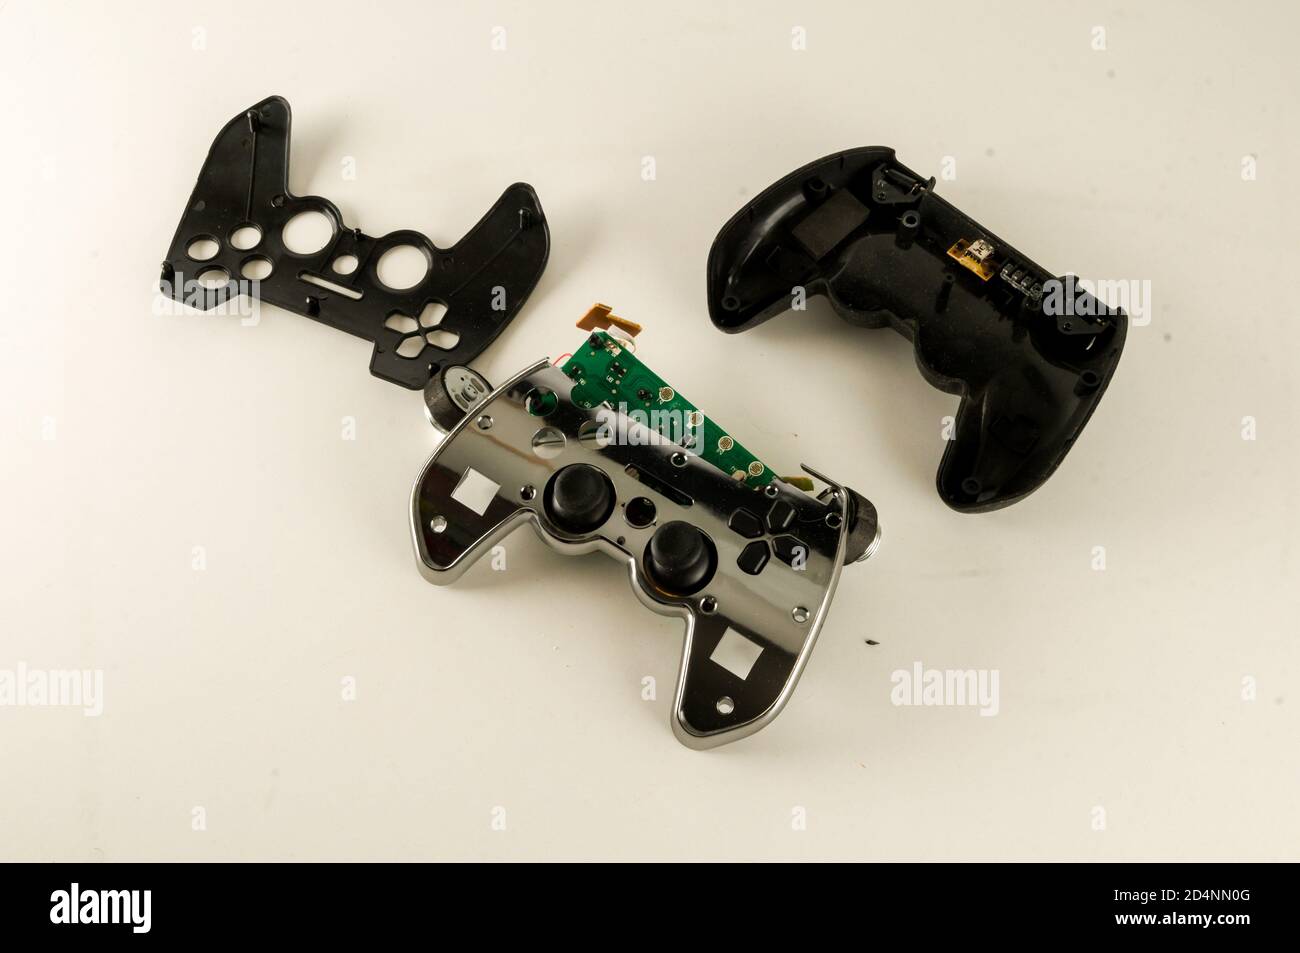 Joystick Gamepad rotto su sfondo bianco Foto stock - Alamy